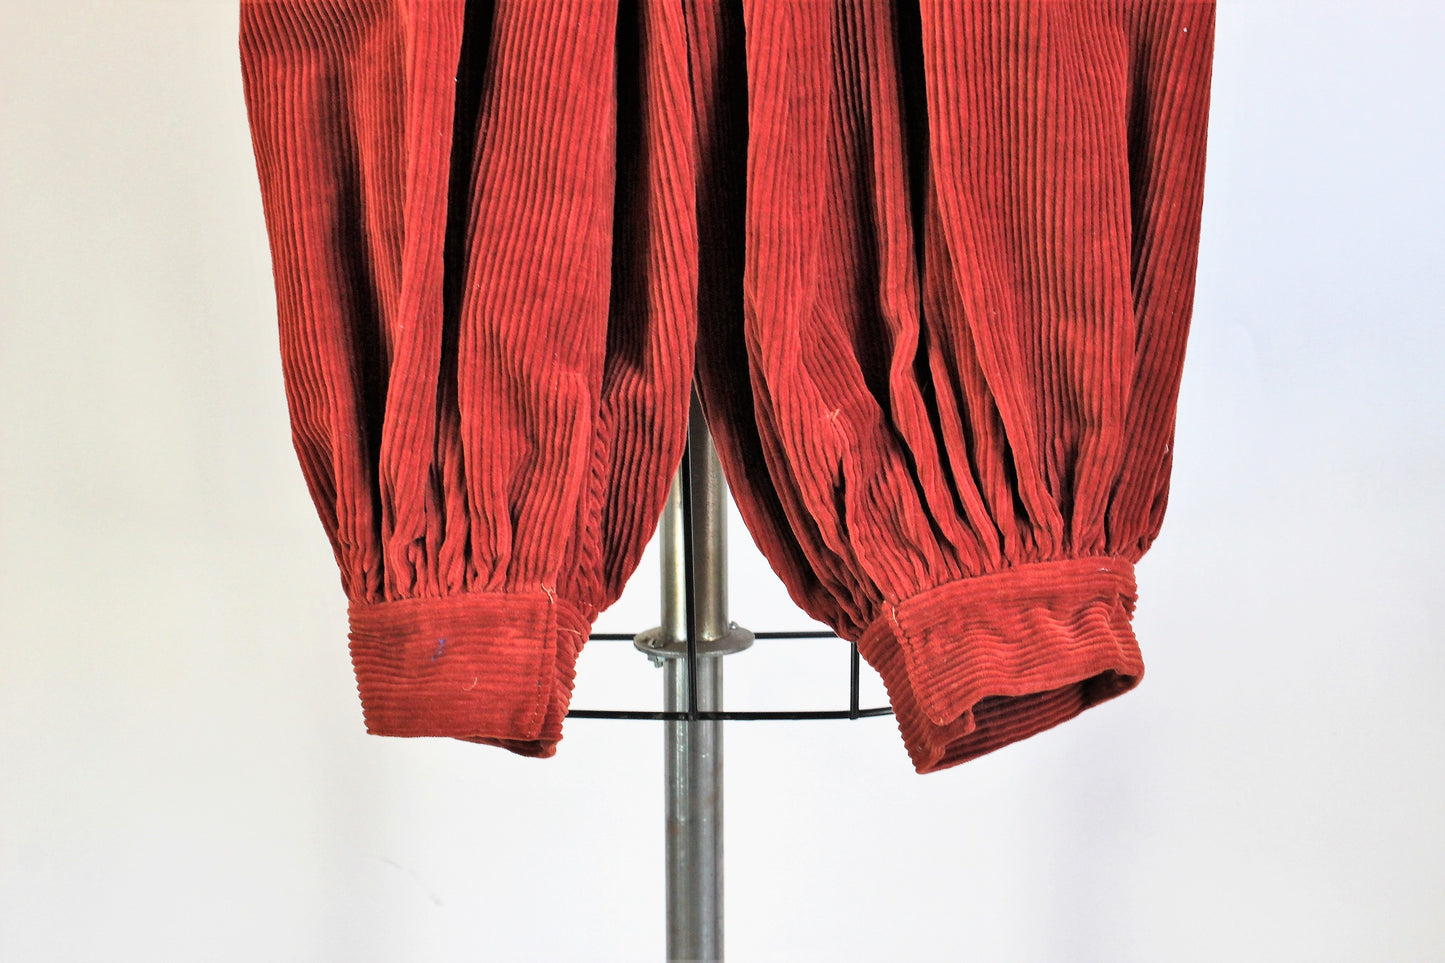 Vintage 1940s Hollywood Costume Pants In Red Corduroy